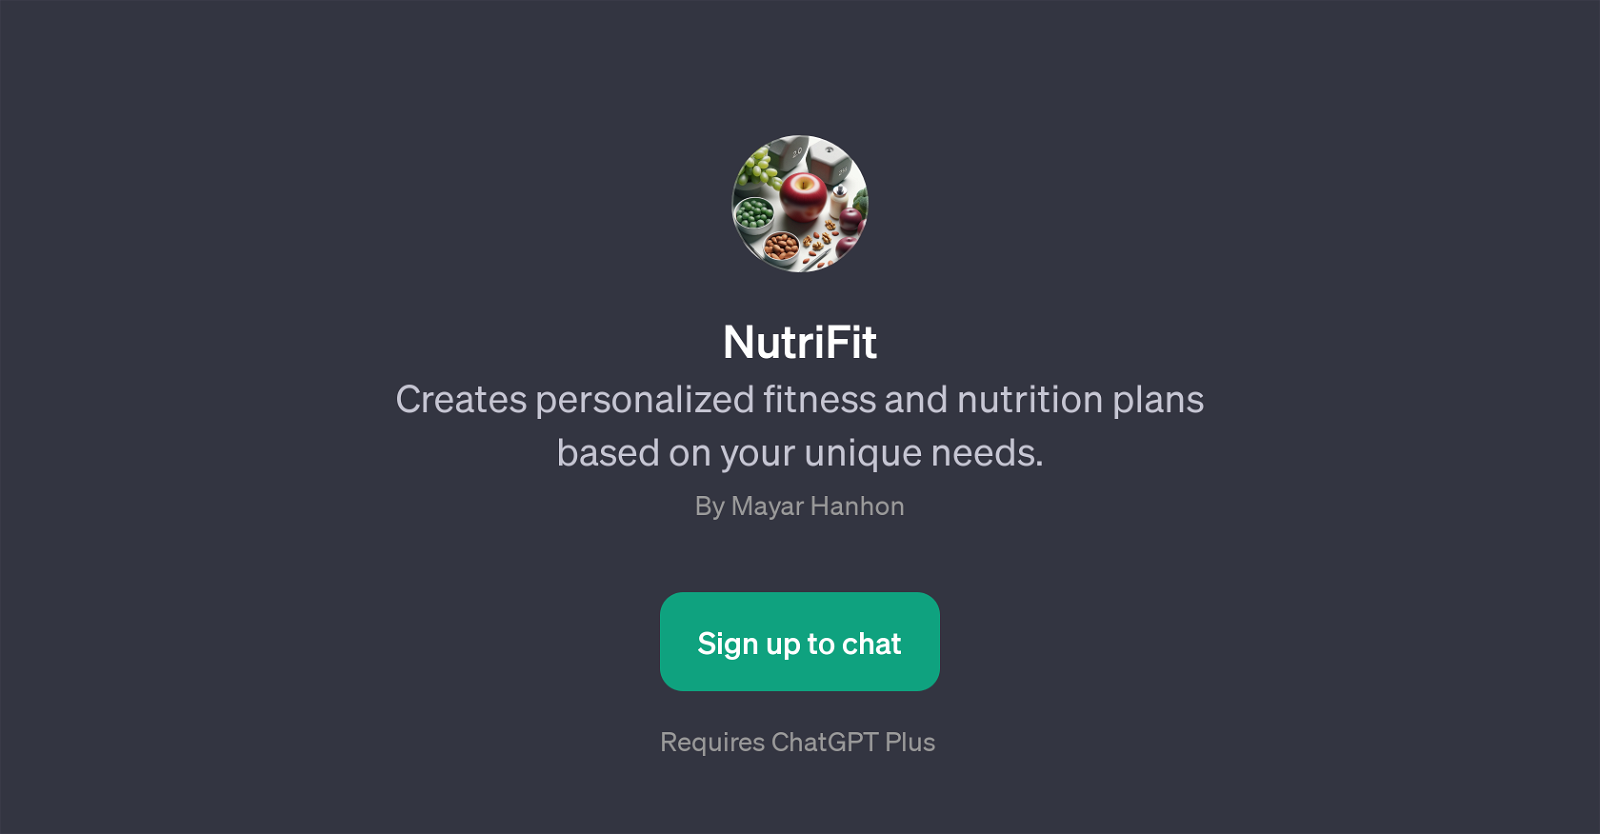 NutriFit website